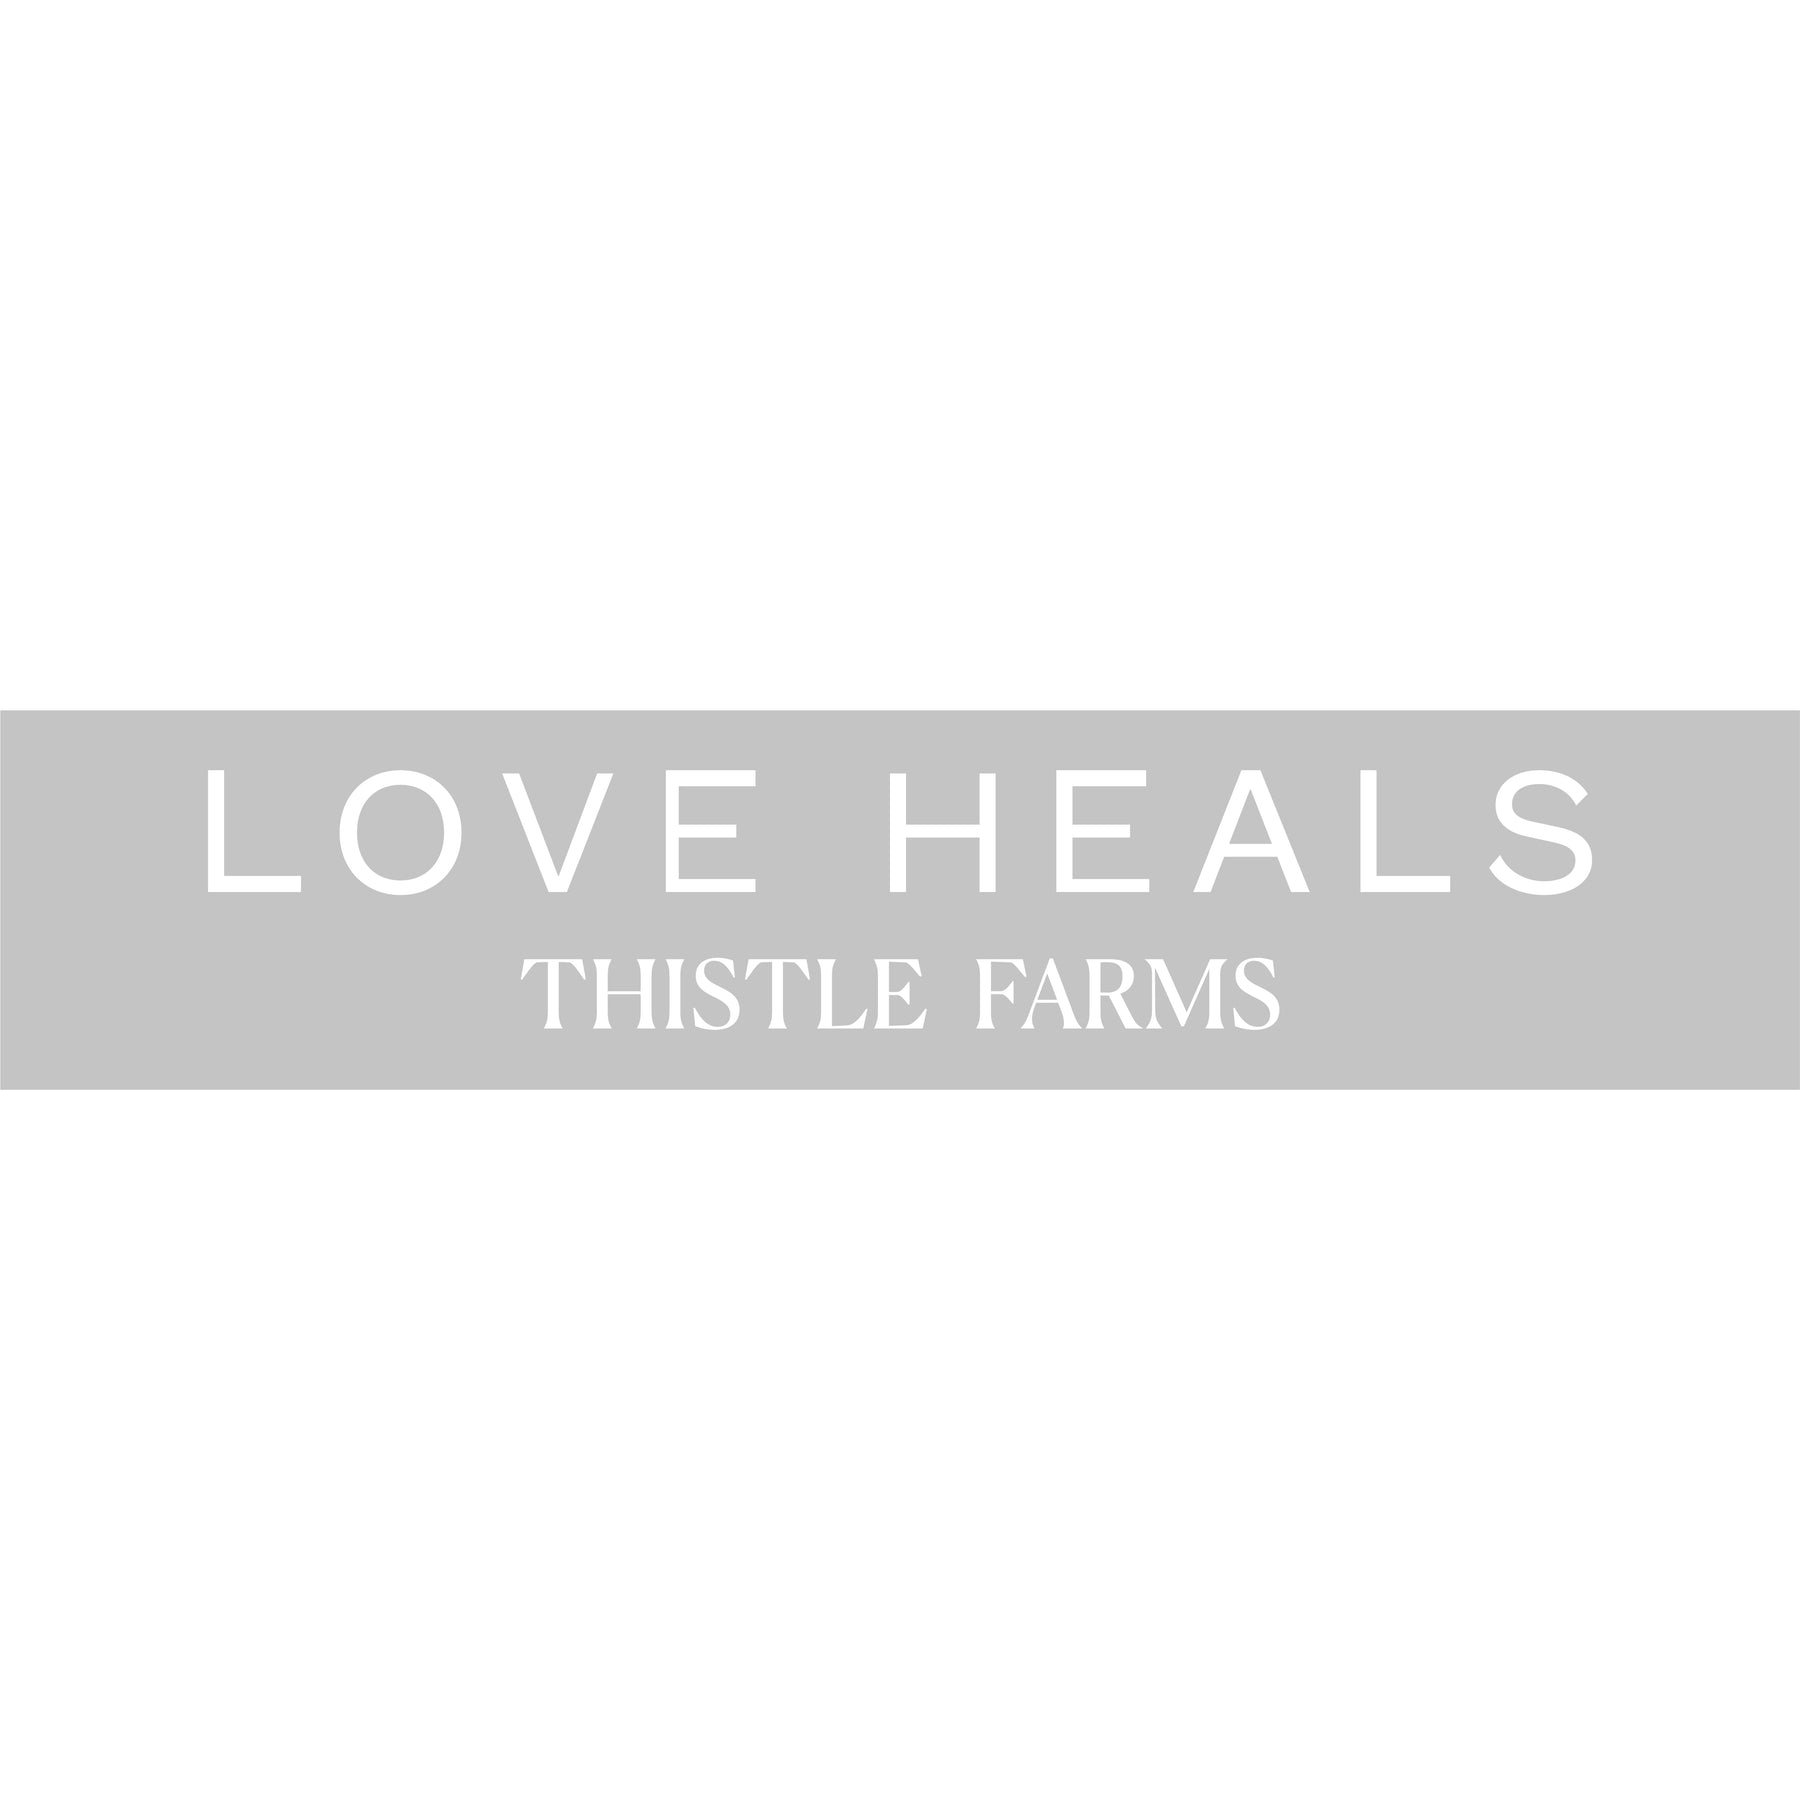 Love Heals Window Cling